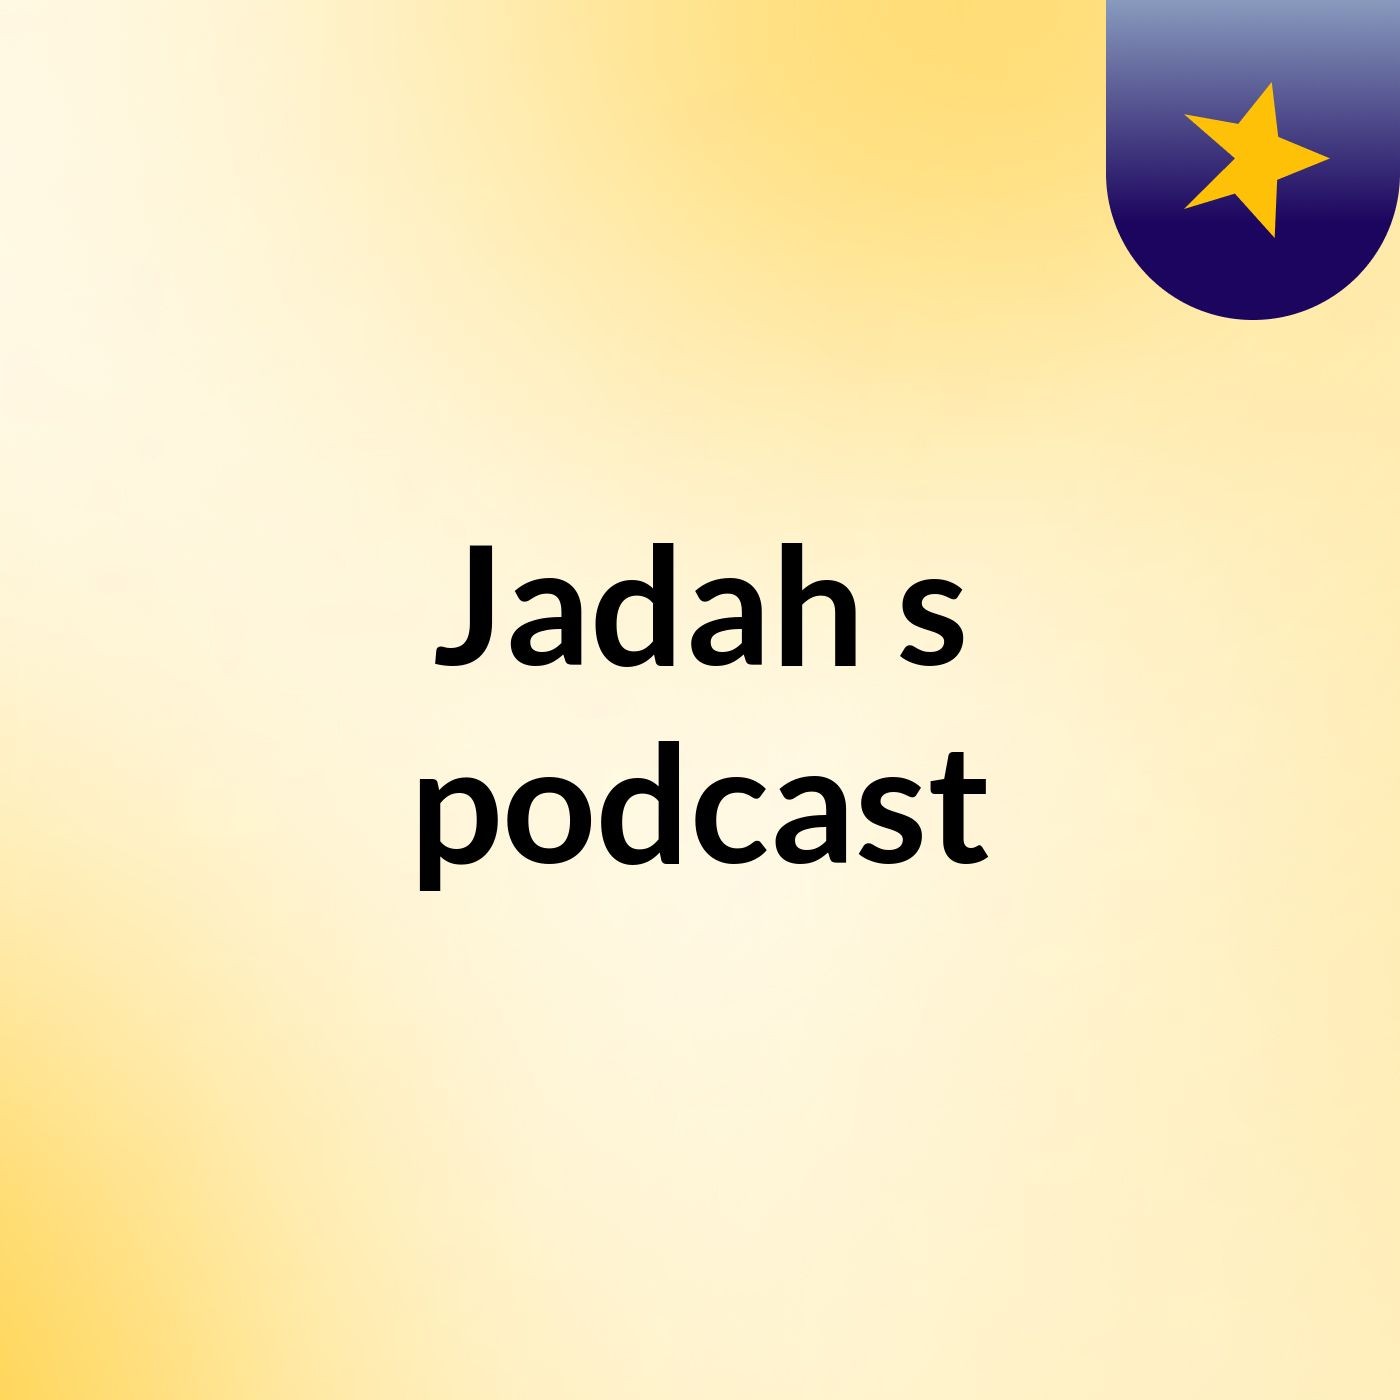 Jadah's podcast